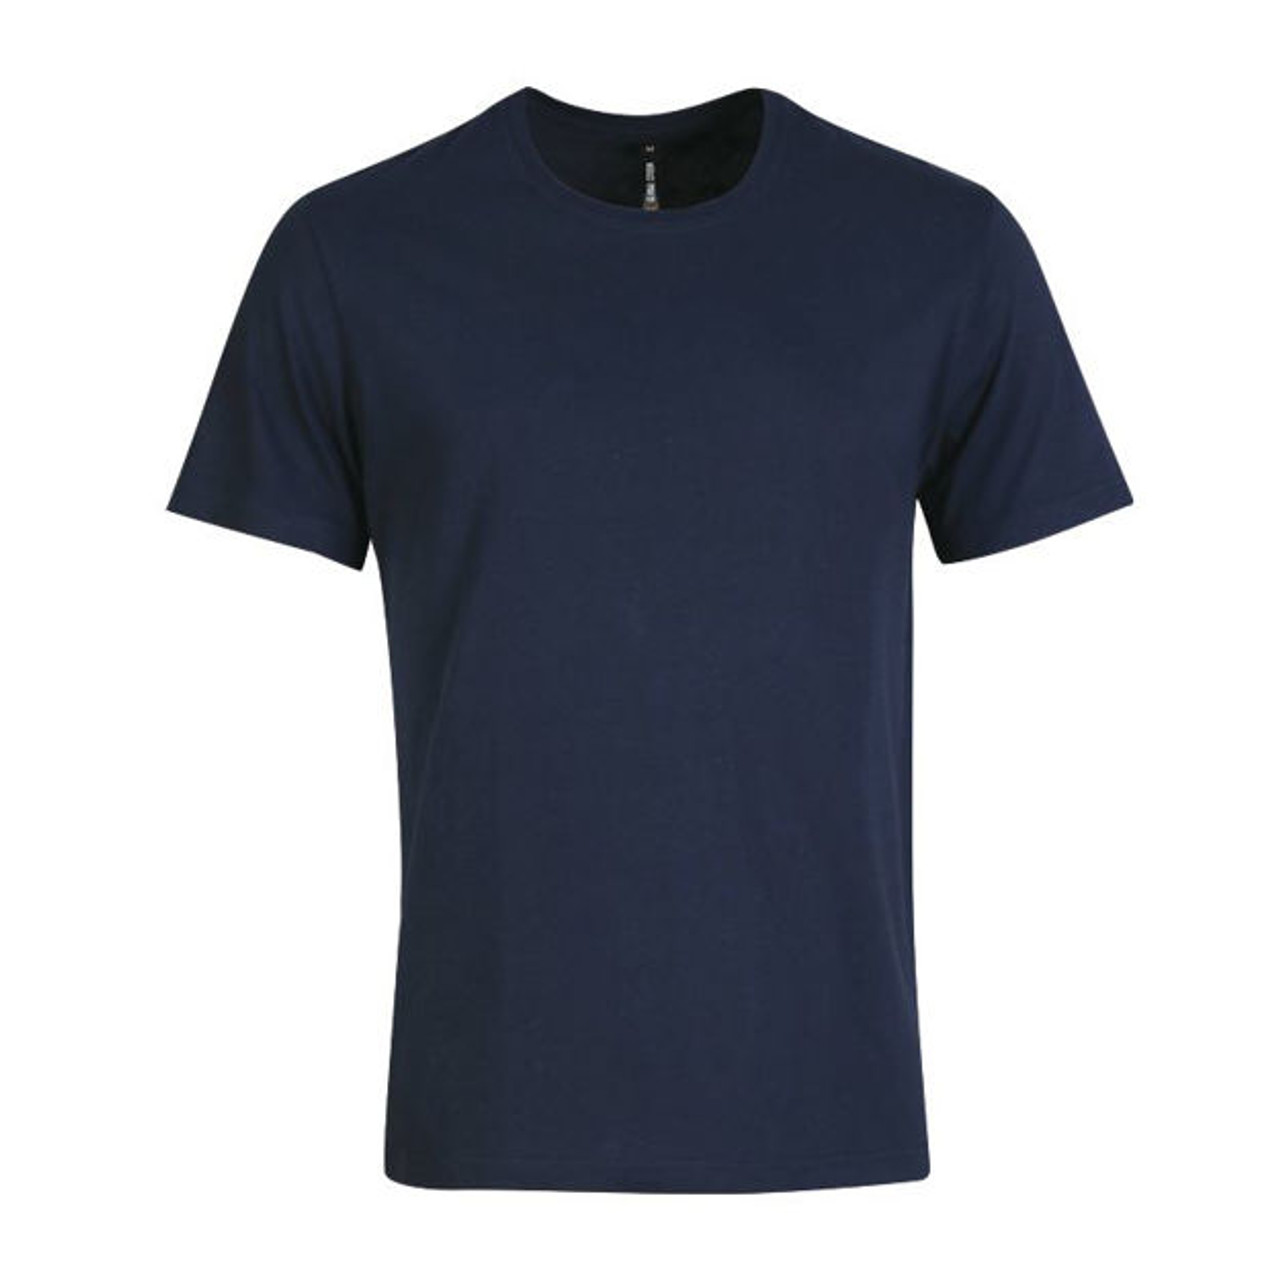 Urban Lifestyle T-Shirts | Branding T-Shirts | Azulwear Cape Town ...